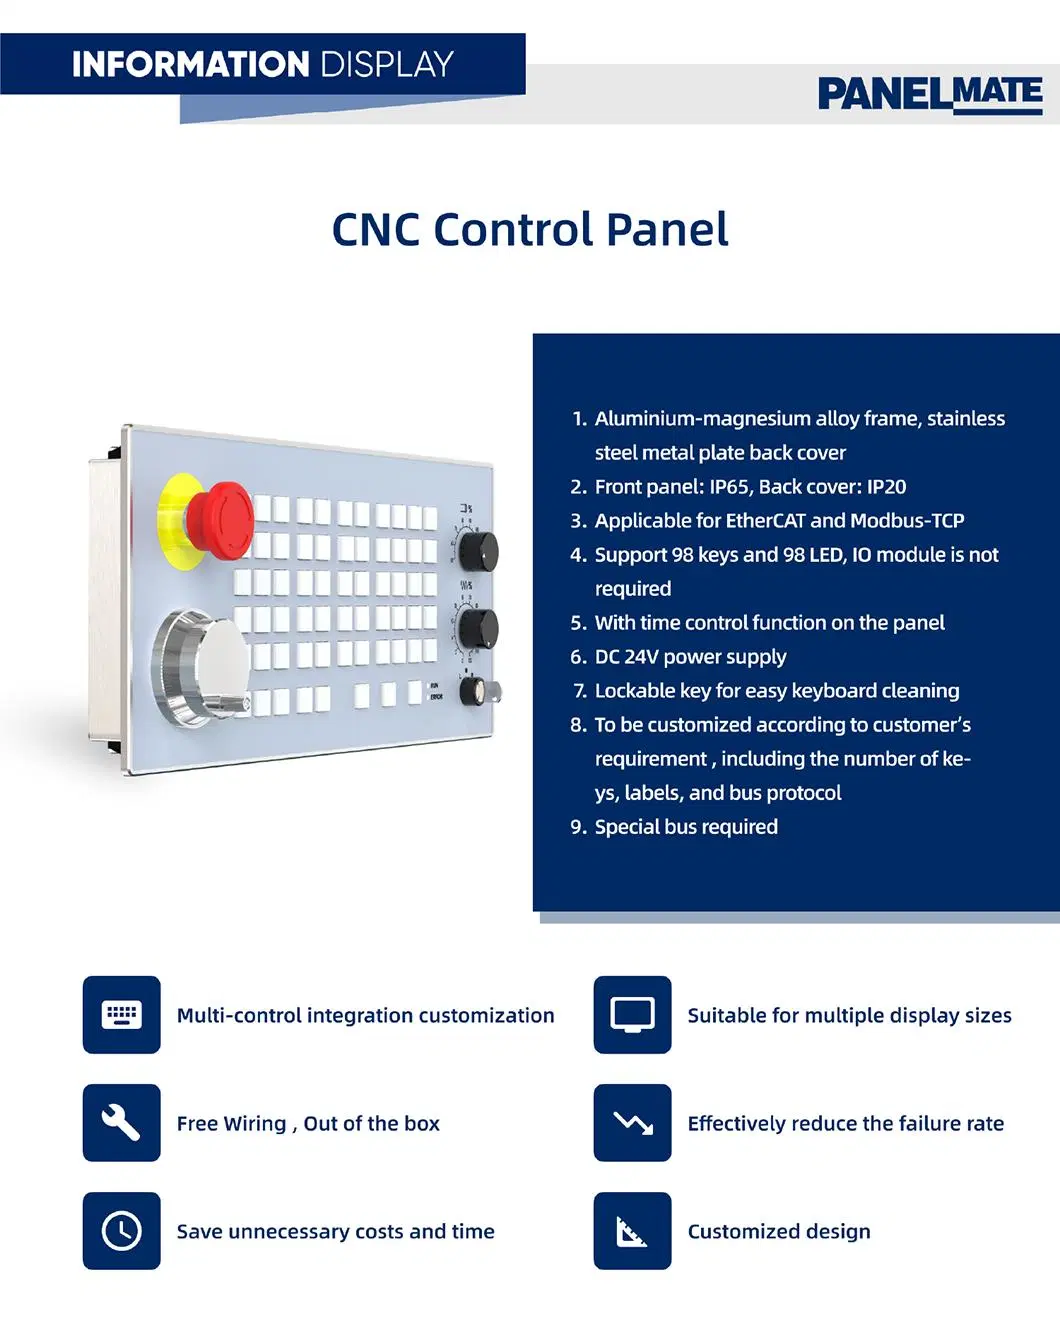 Panel21190 HMI PLC Ethercat Industrial Control Panel One Industrial Panel PC for CNC Controller Machine